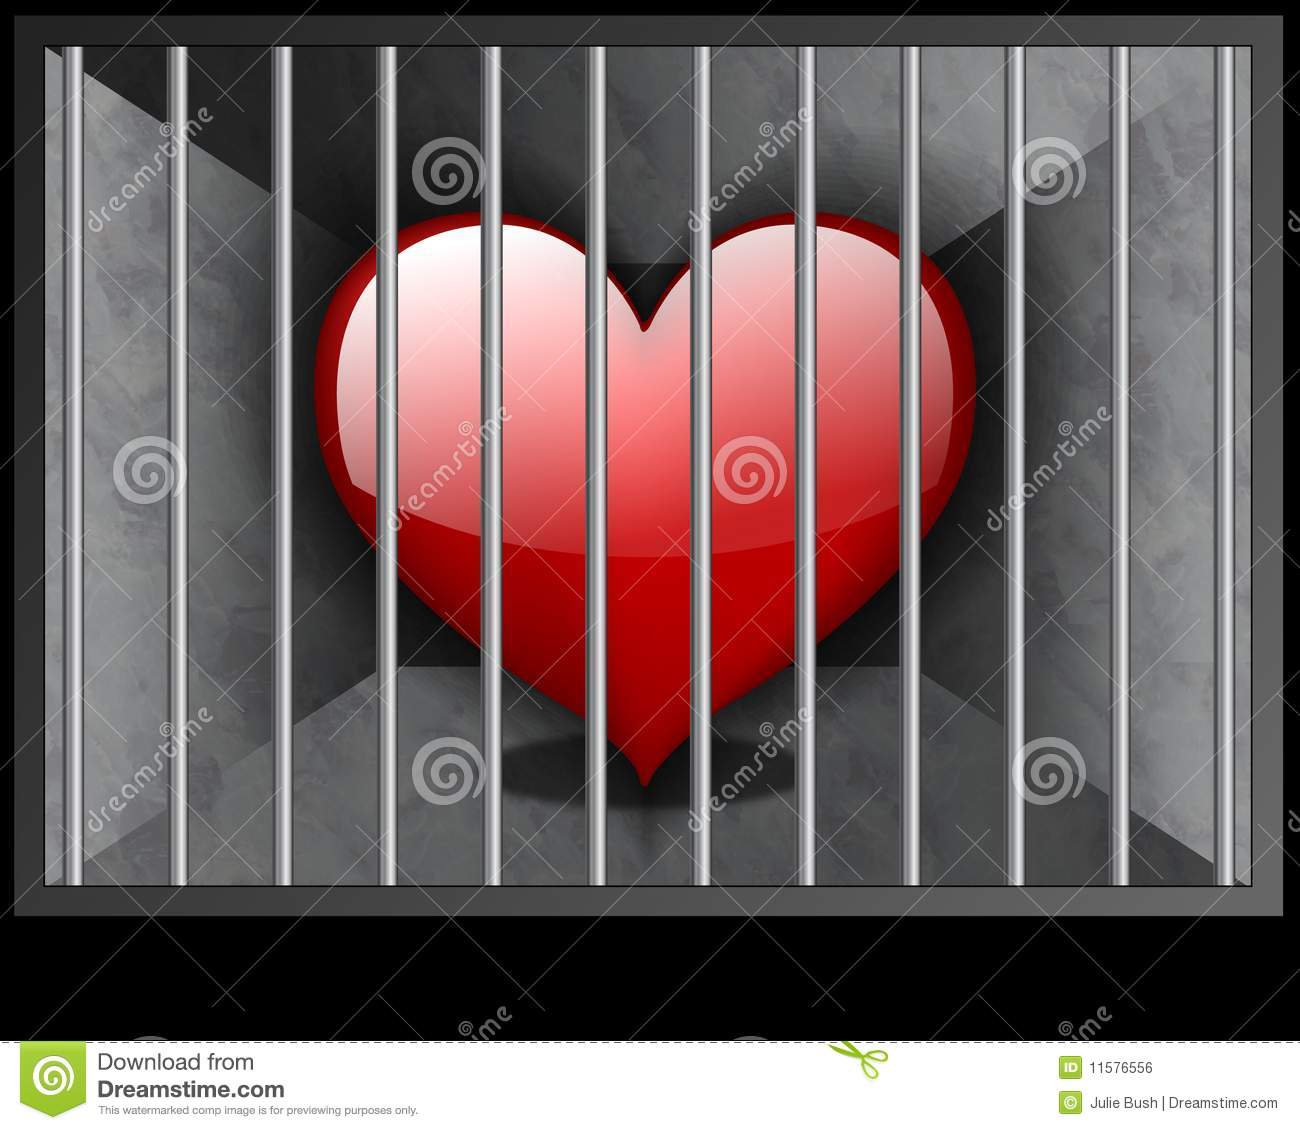 Love Behind Bars Royalty Free Stock Image   Image  11576556